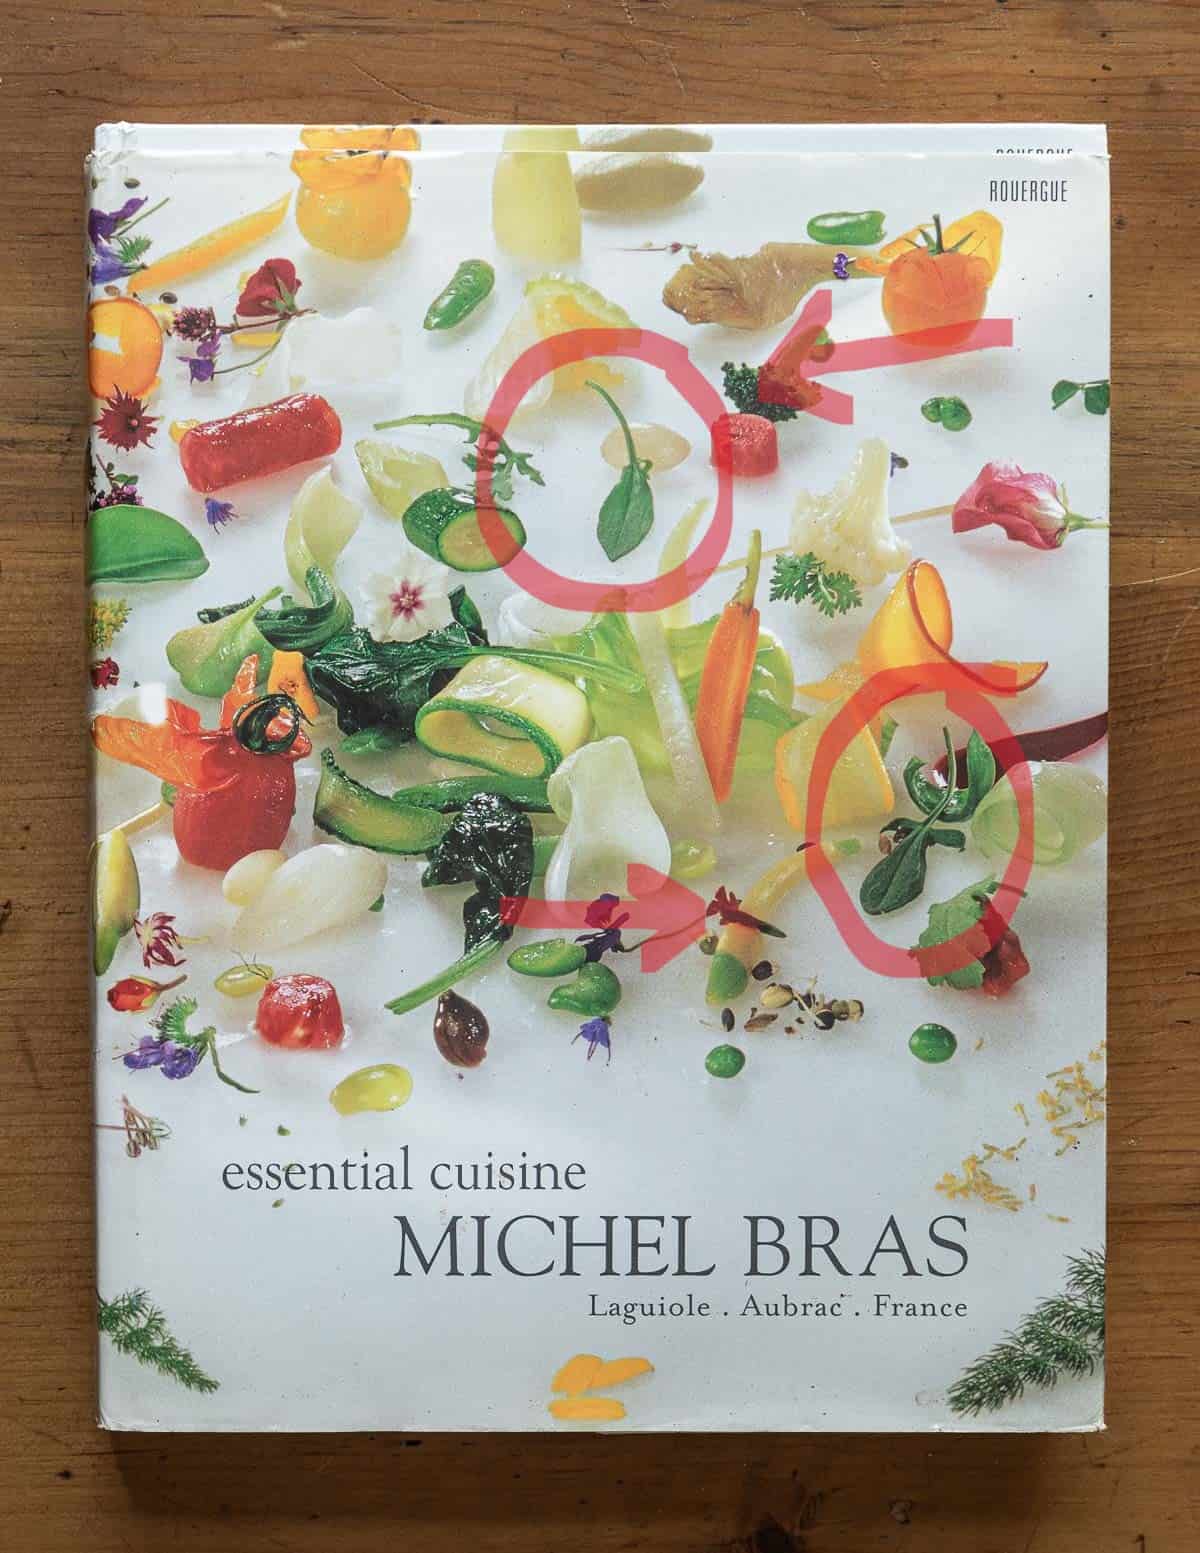 Essential cuisine by Michel Bras. 